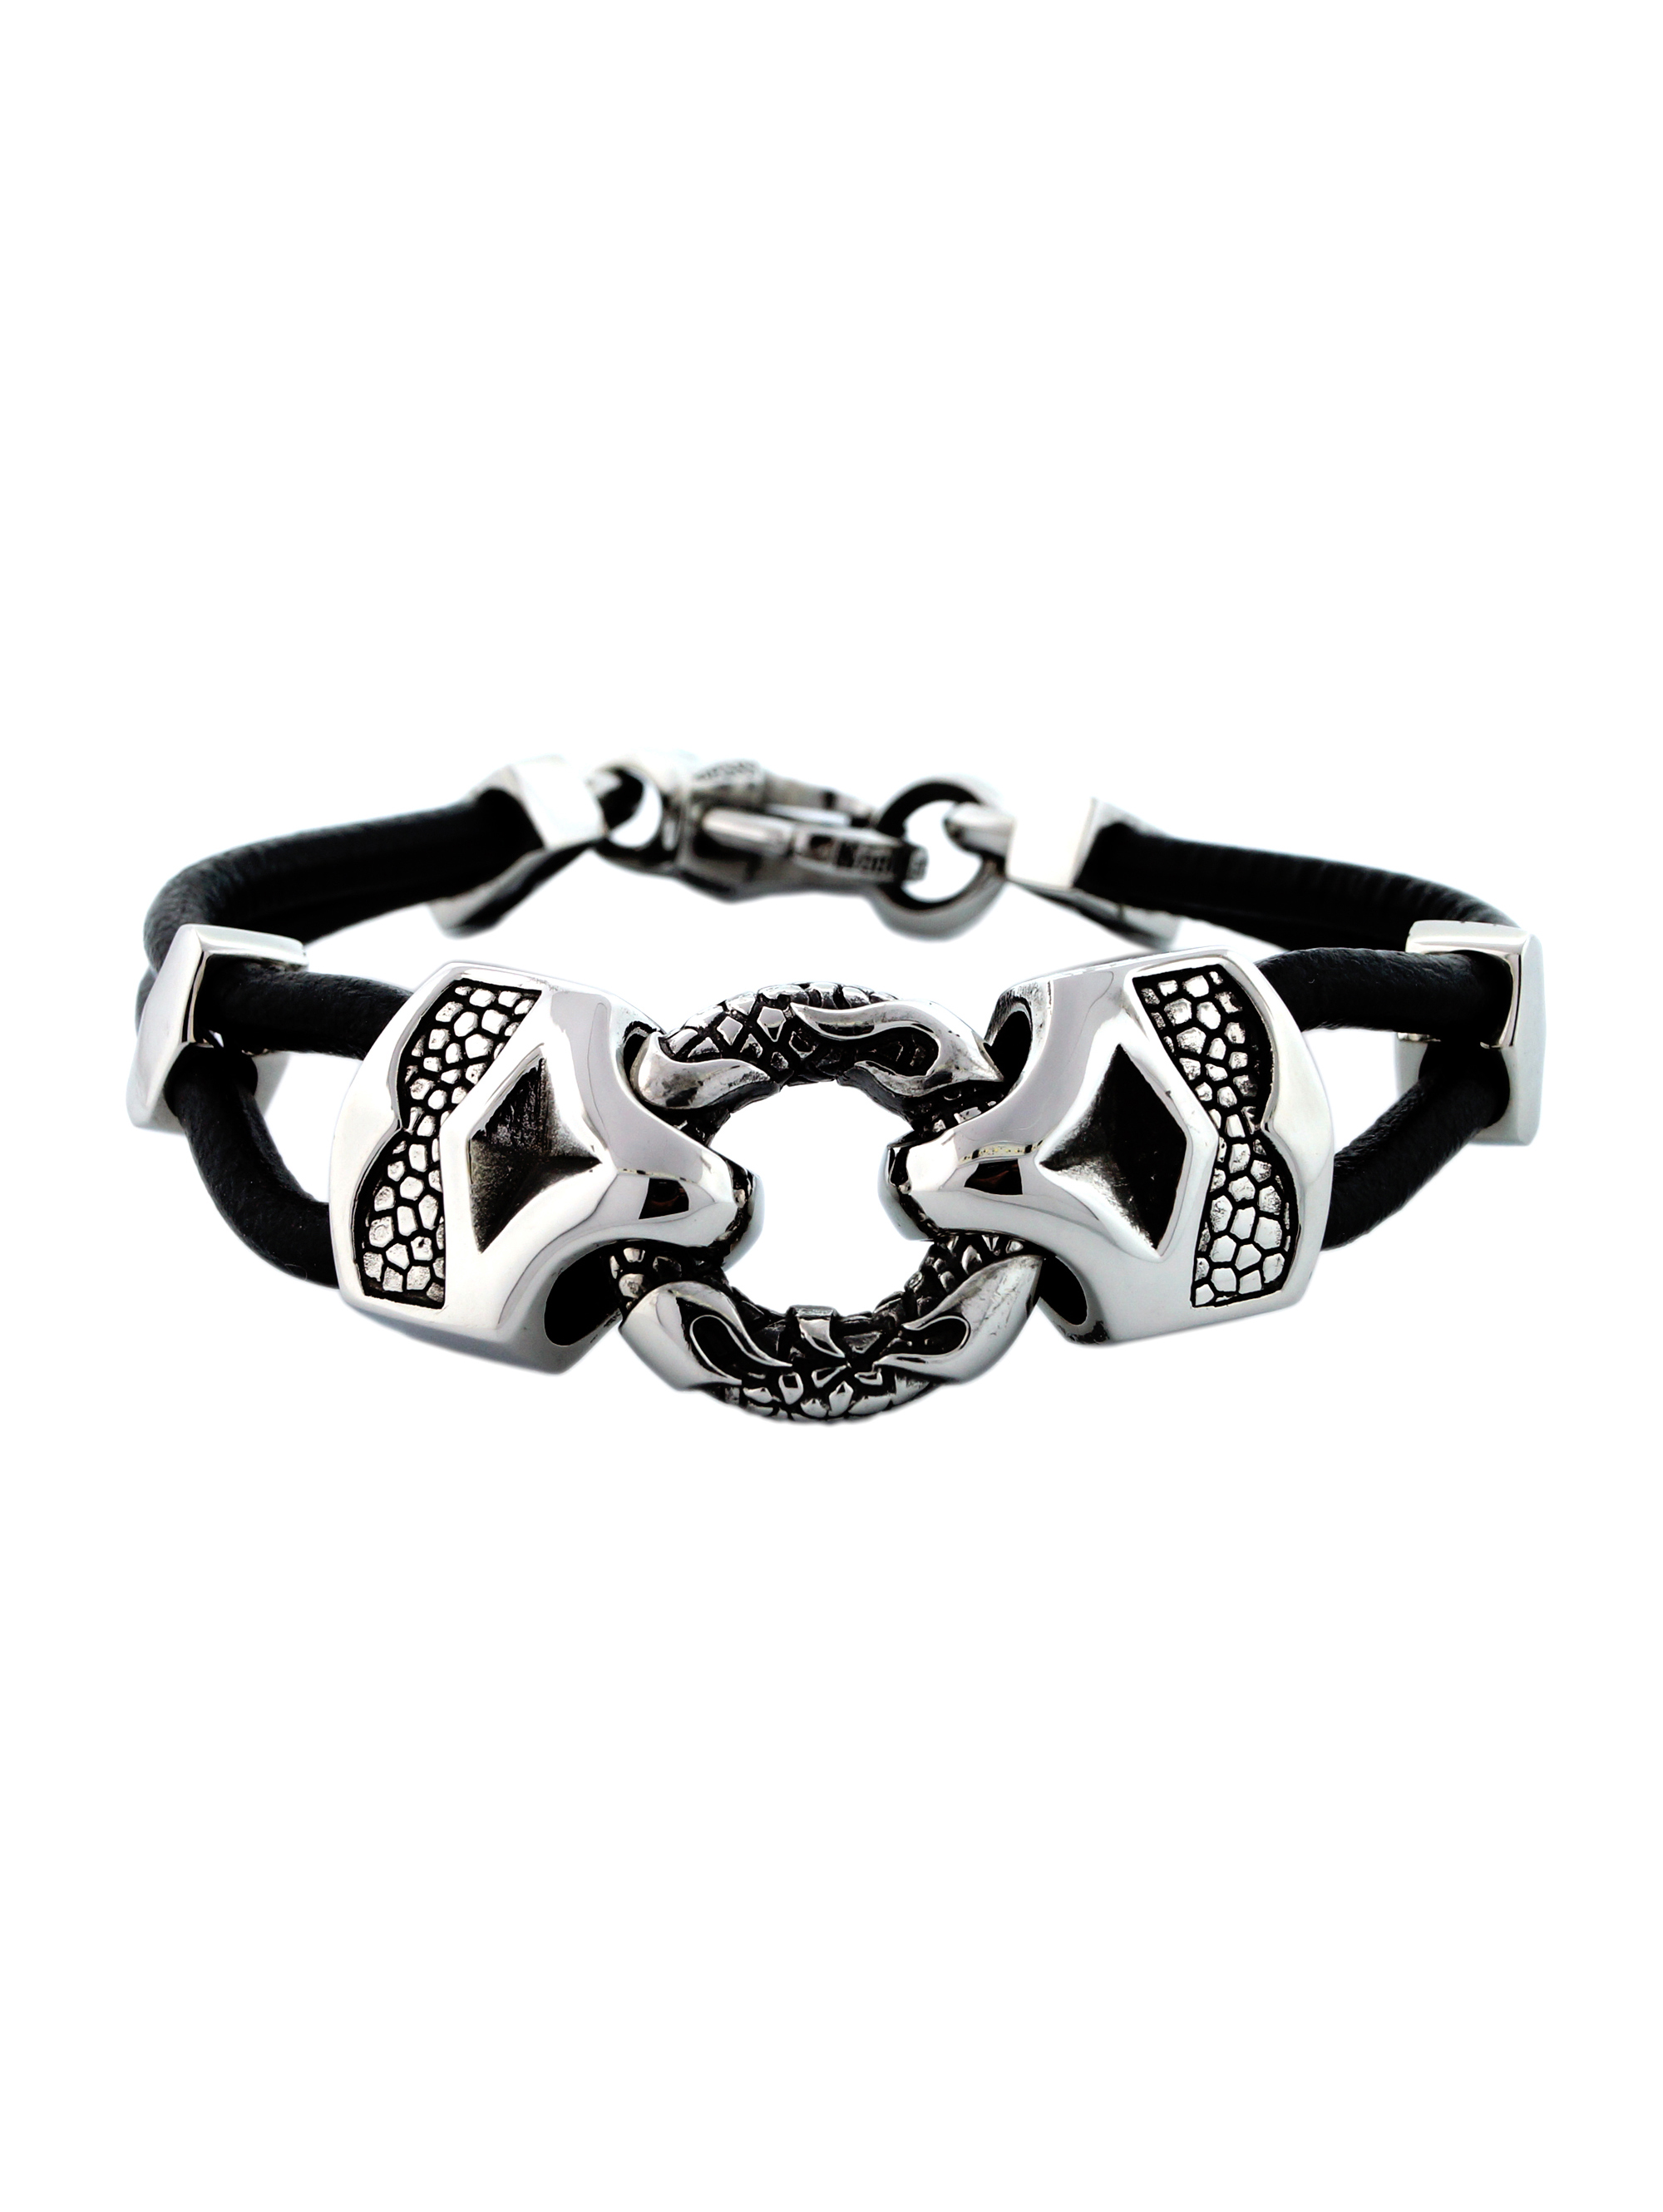 Men's Stainless Steel Tribal Design Double Leather Bracelet, 8" - image 1 of 1